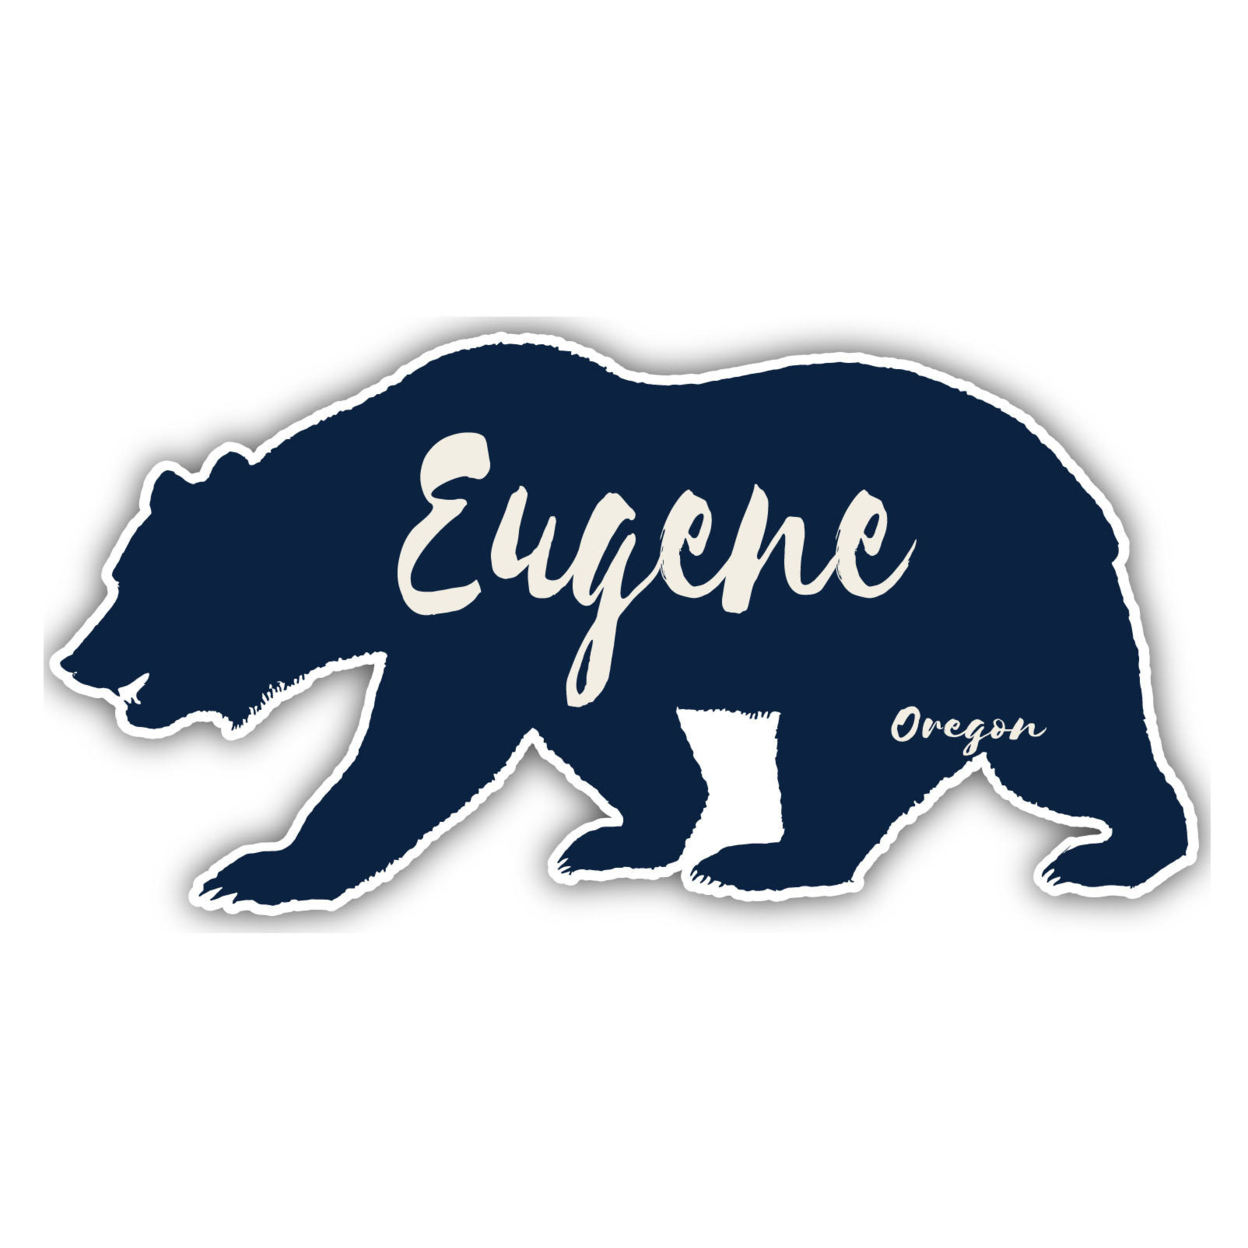 Eugene Oregon Souvenir Decorative Stickers (Choose Theme And Size) - 4-Pack, 10-Inch, Bear